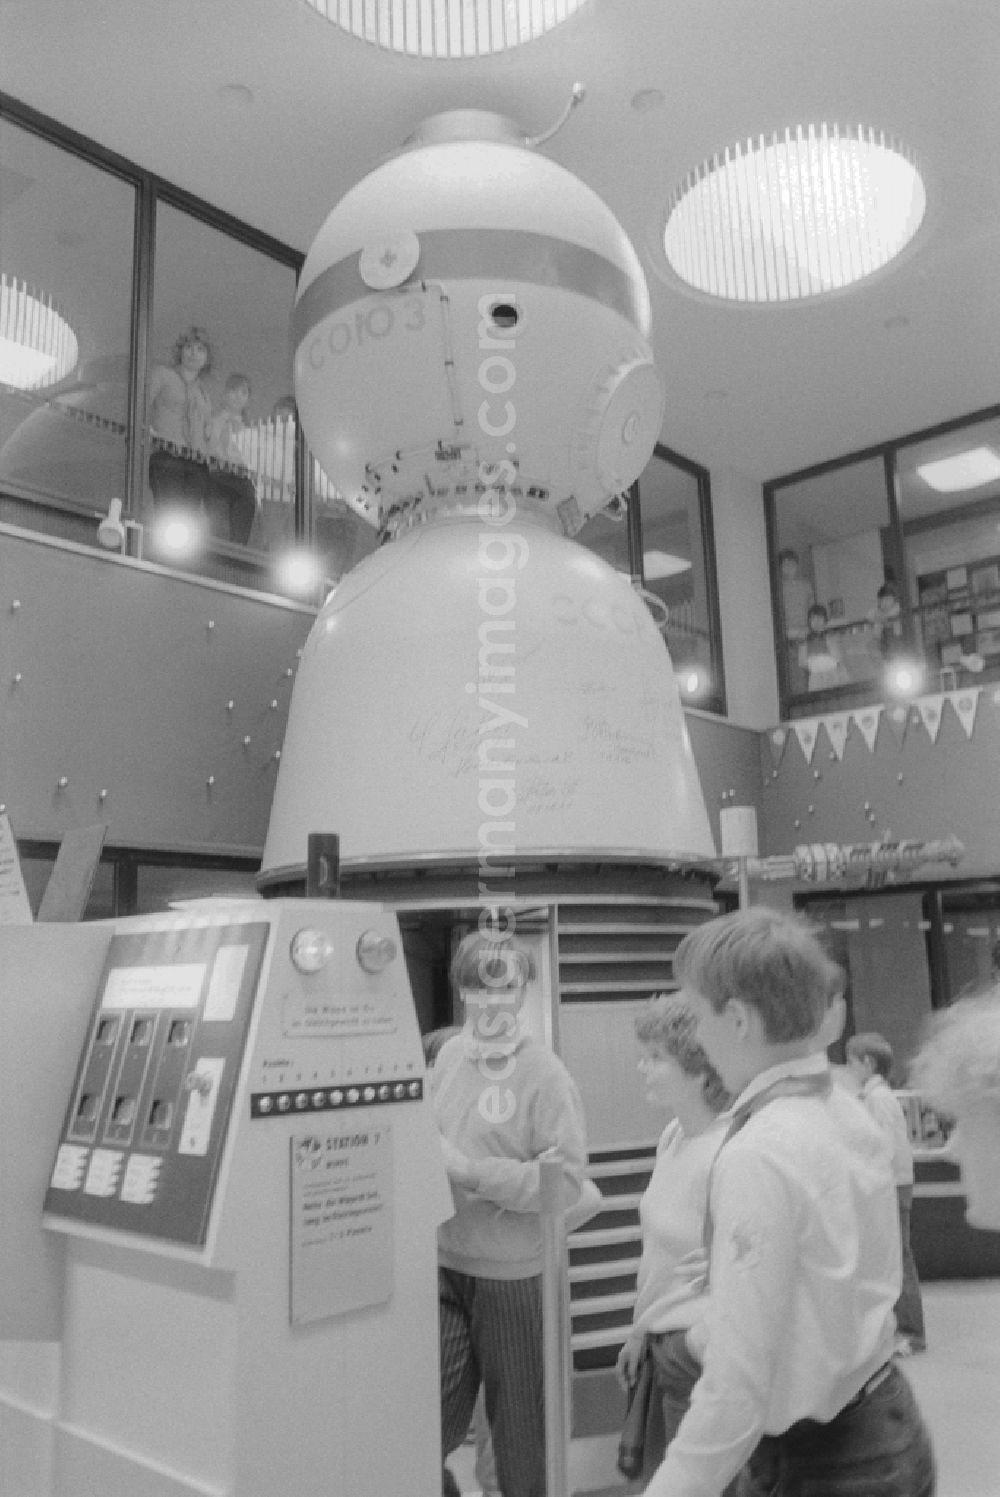 GDR picture archive: Berlin - Pioneers in the Pioneer Palace - cosmonaut center in the Wuhlheide in Berlin